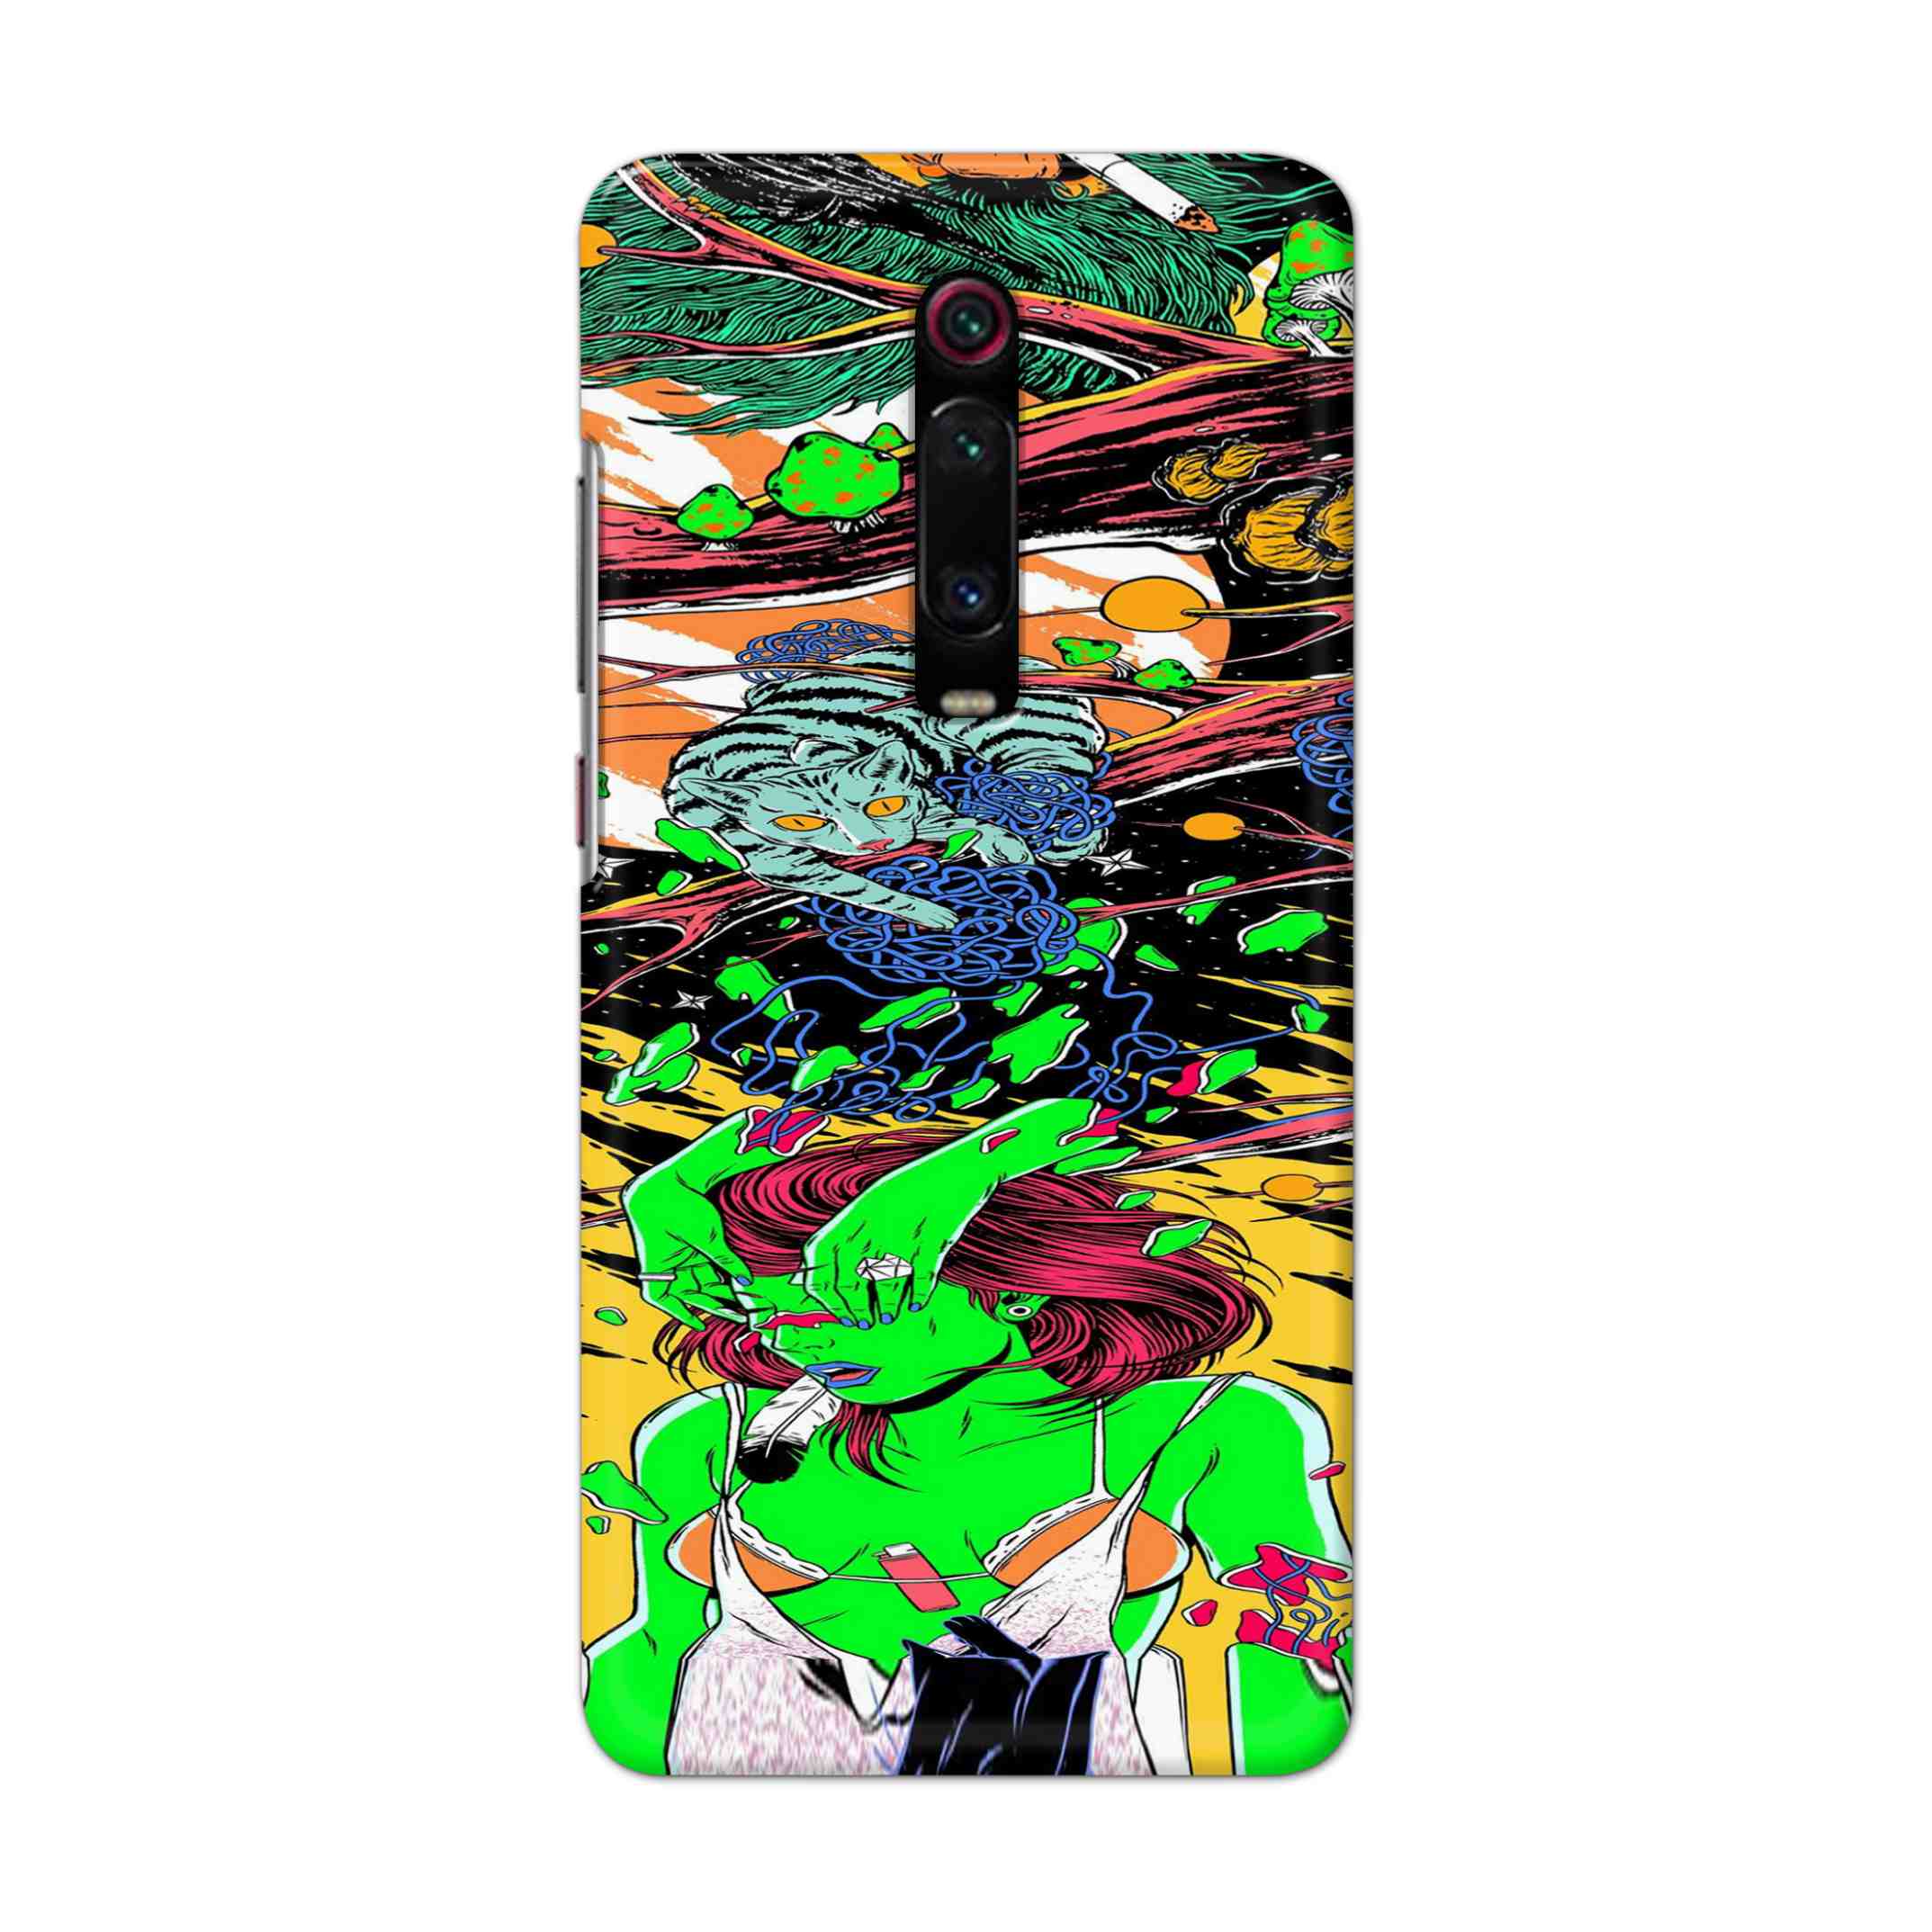 Buy Green Girl Art Hard Back Mobile Phone Case Cover For Xiaomi Redmi K20 Online